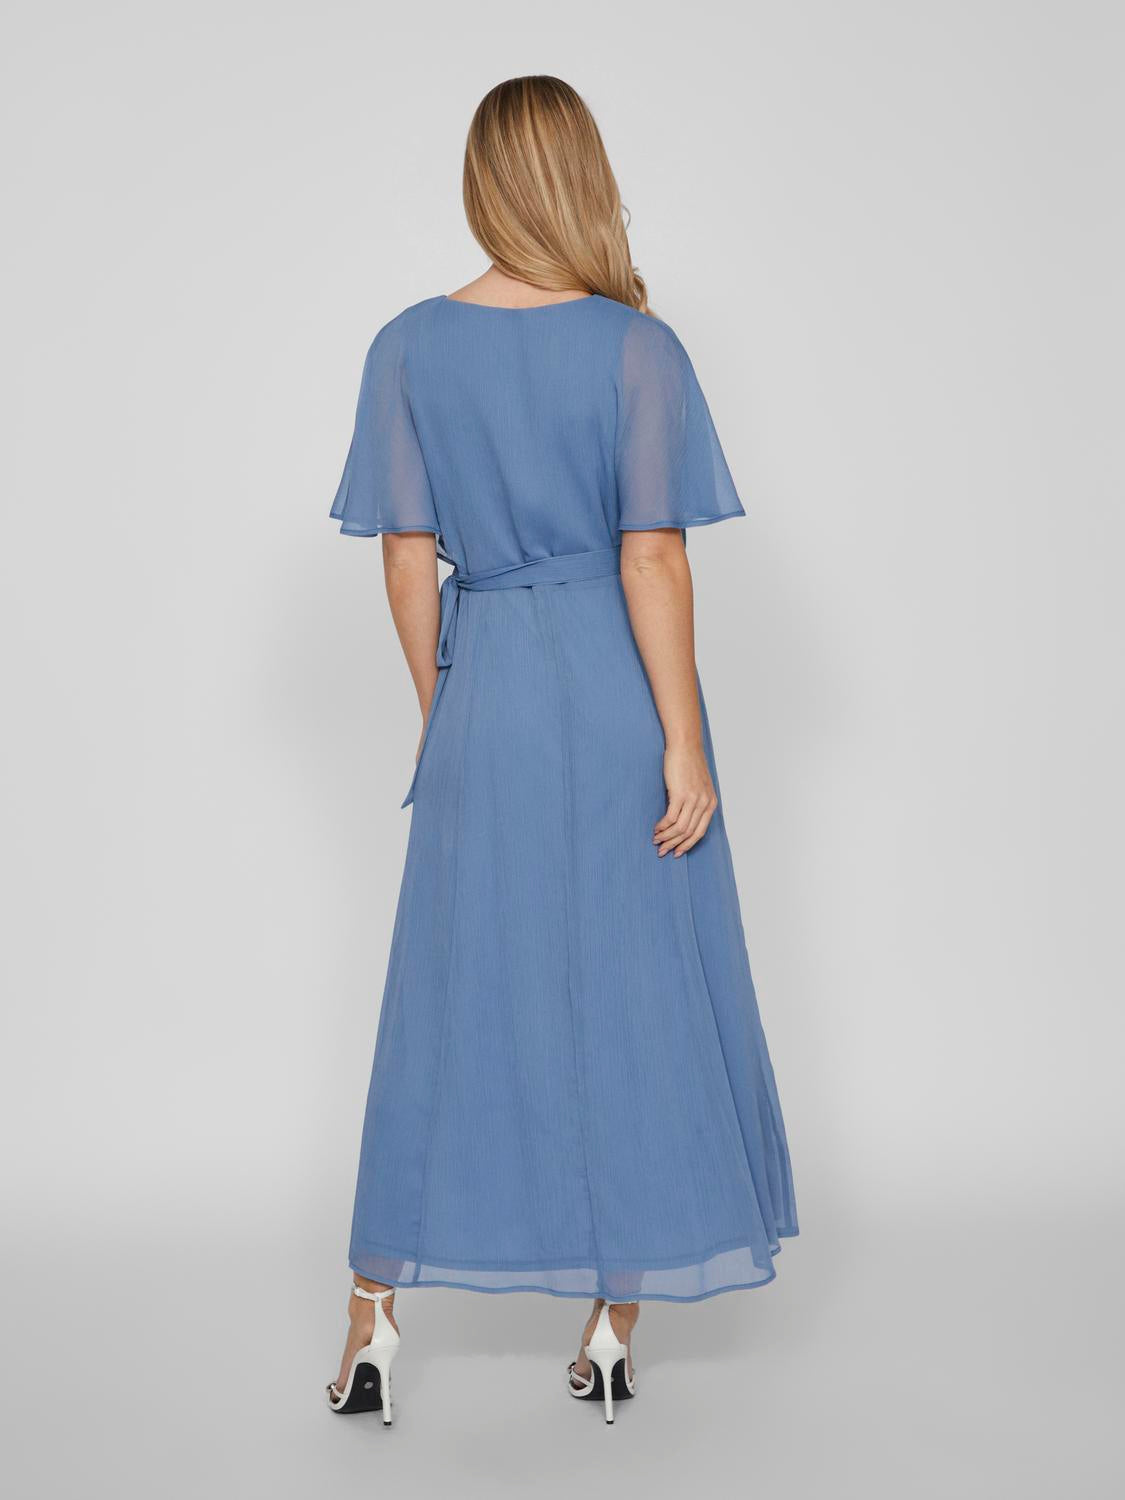 VIRILLA Dress - Coronet Blue